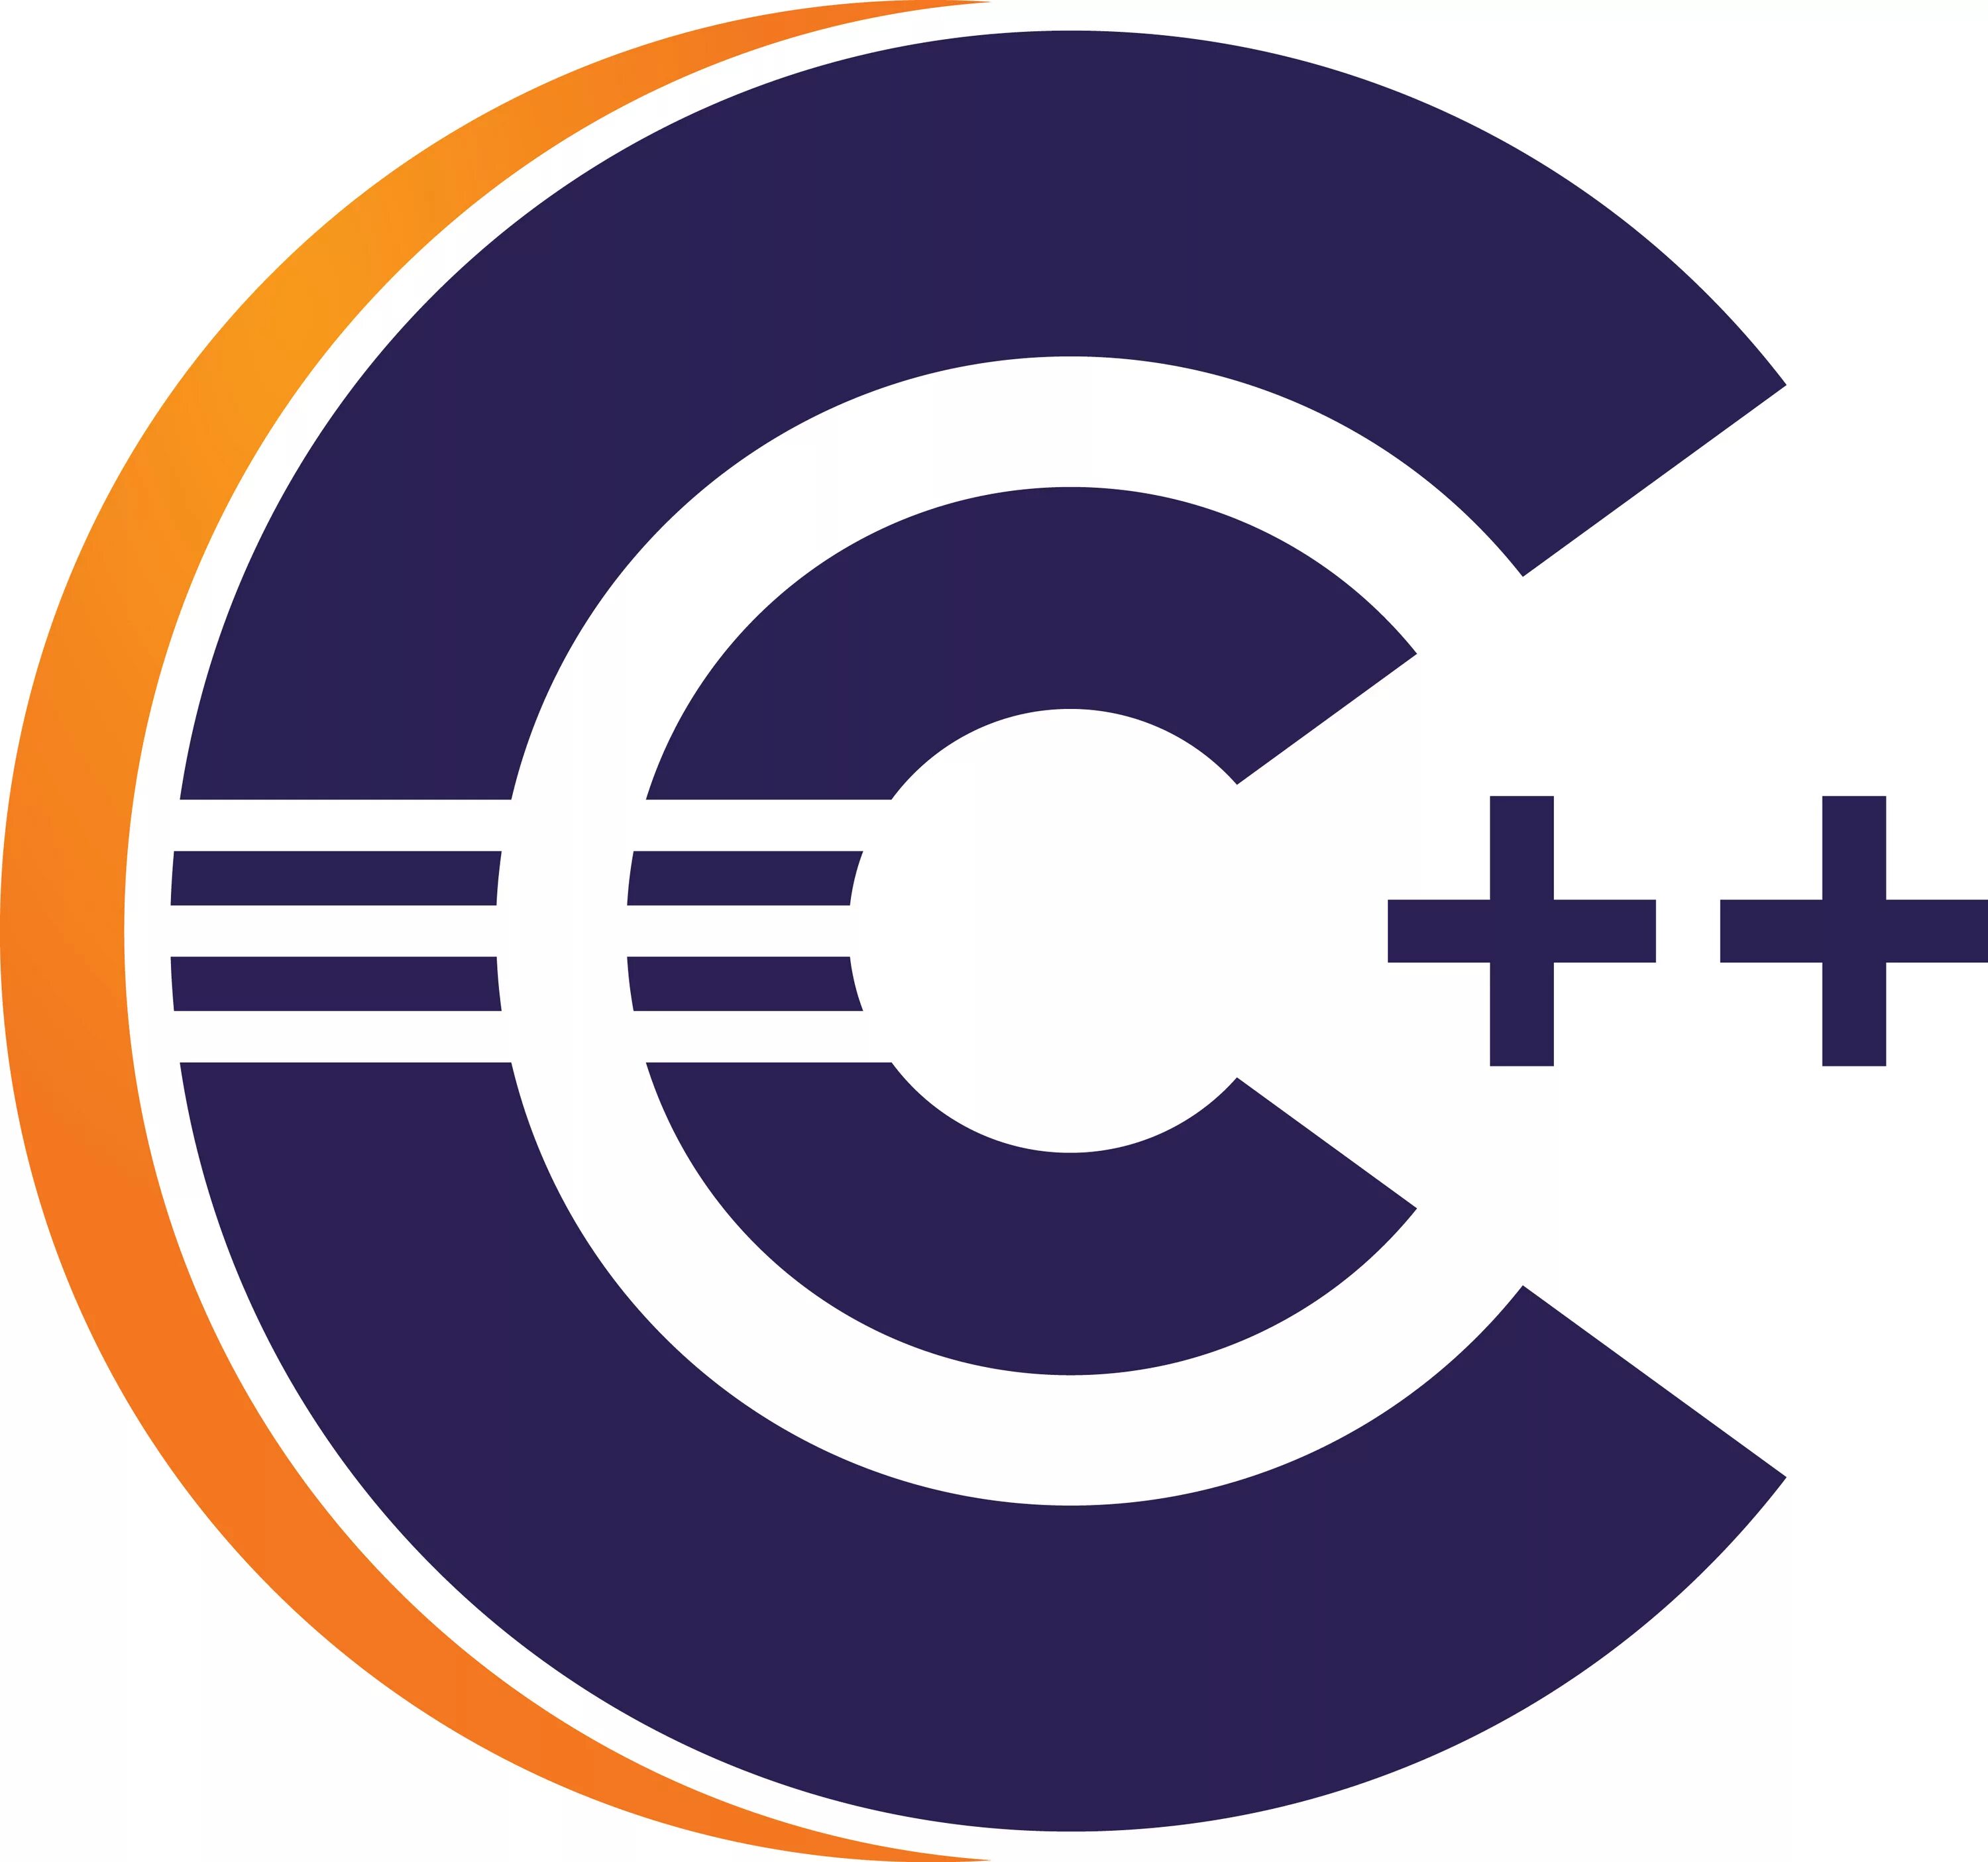 Cpp vector. Логотип си. С++ логотип. C язык программирования логотип. Eclipse c++ логотип.